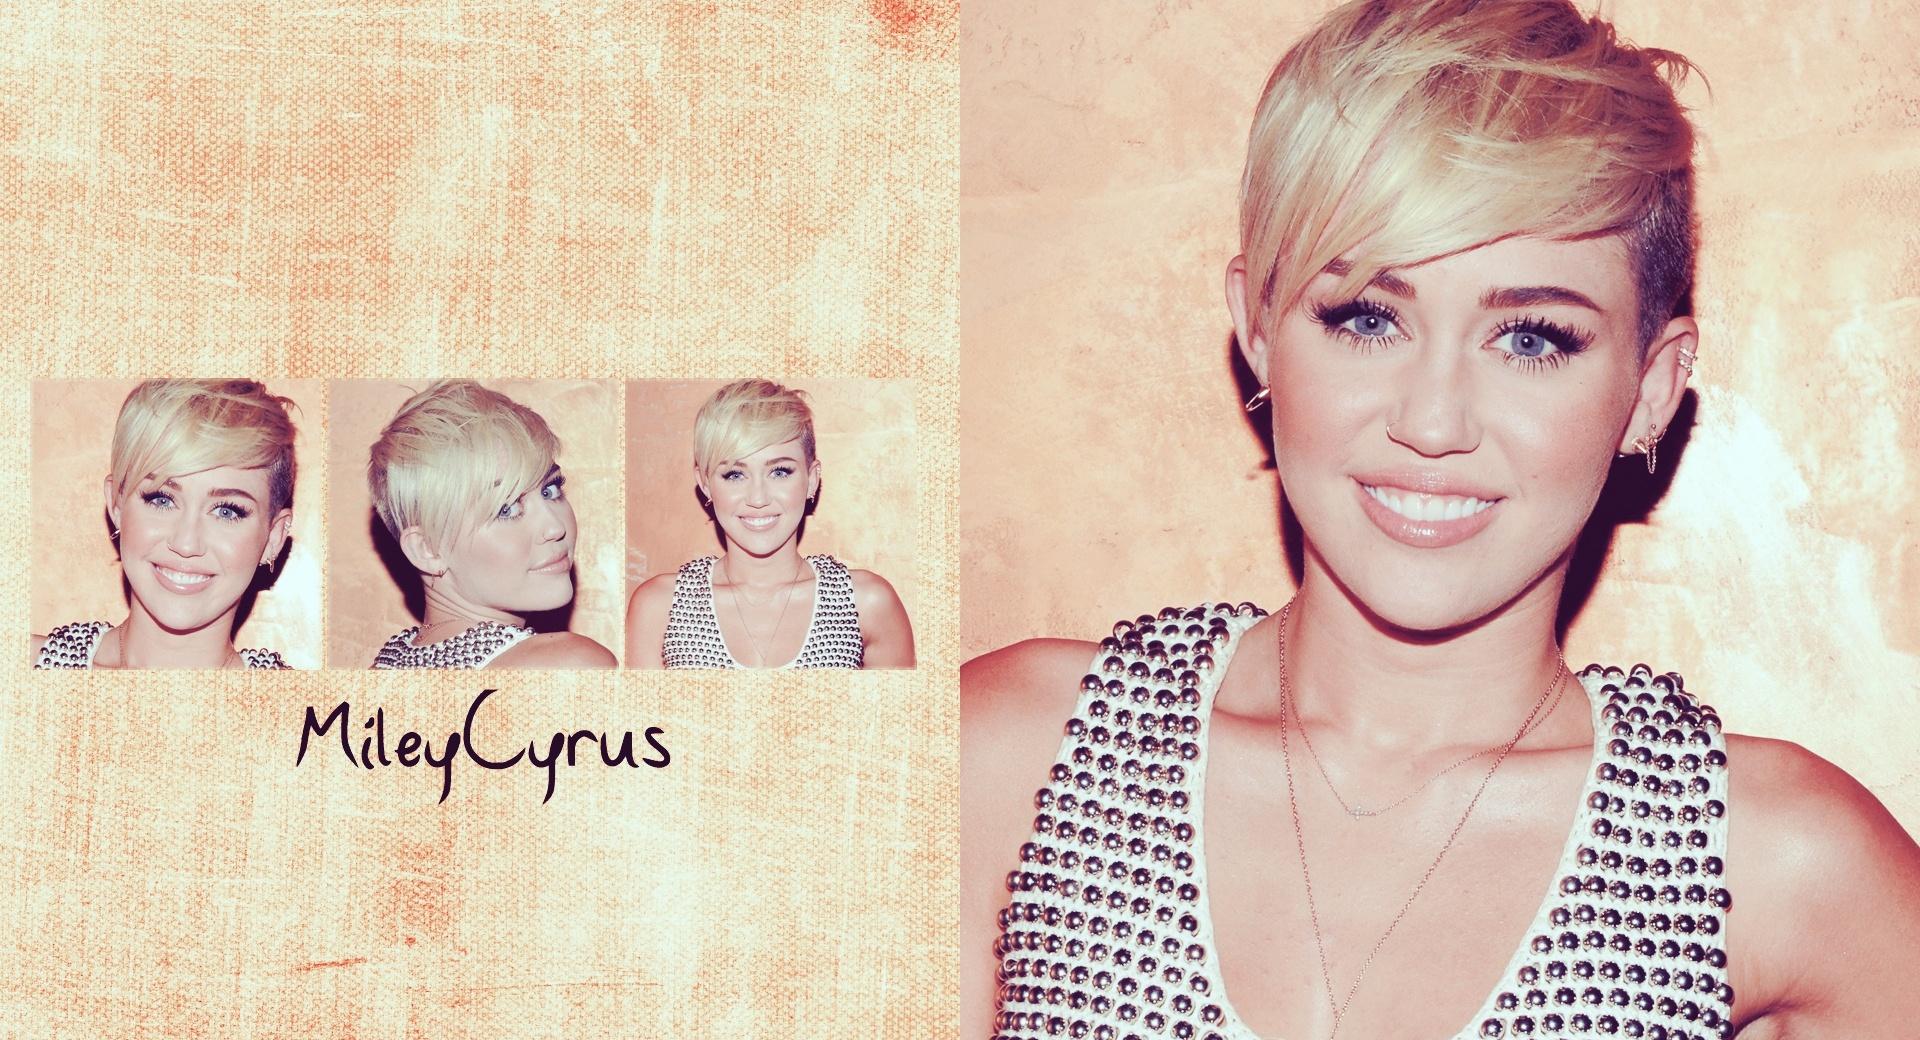 Miley Cyrus New Haircut at 1024 x 1024 iPad size wallpapers HD quality